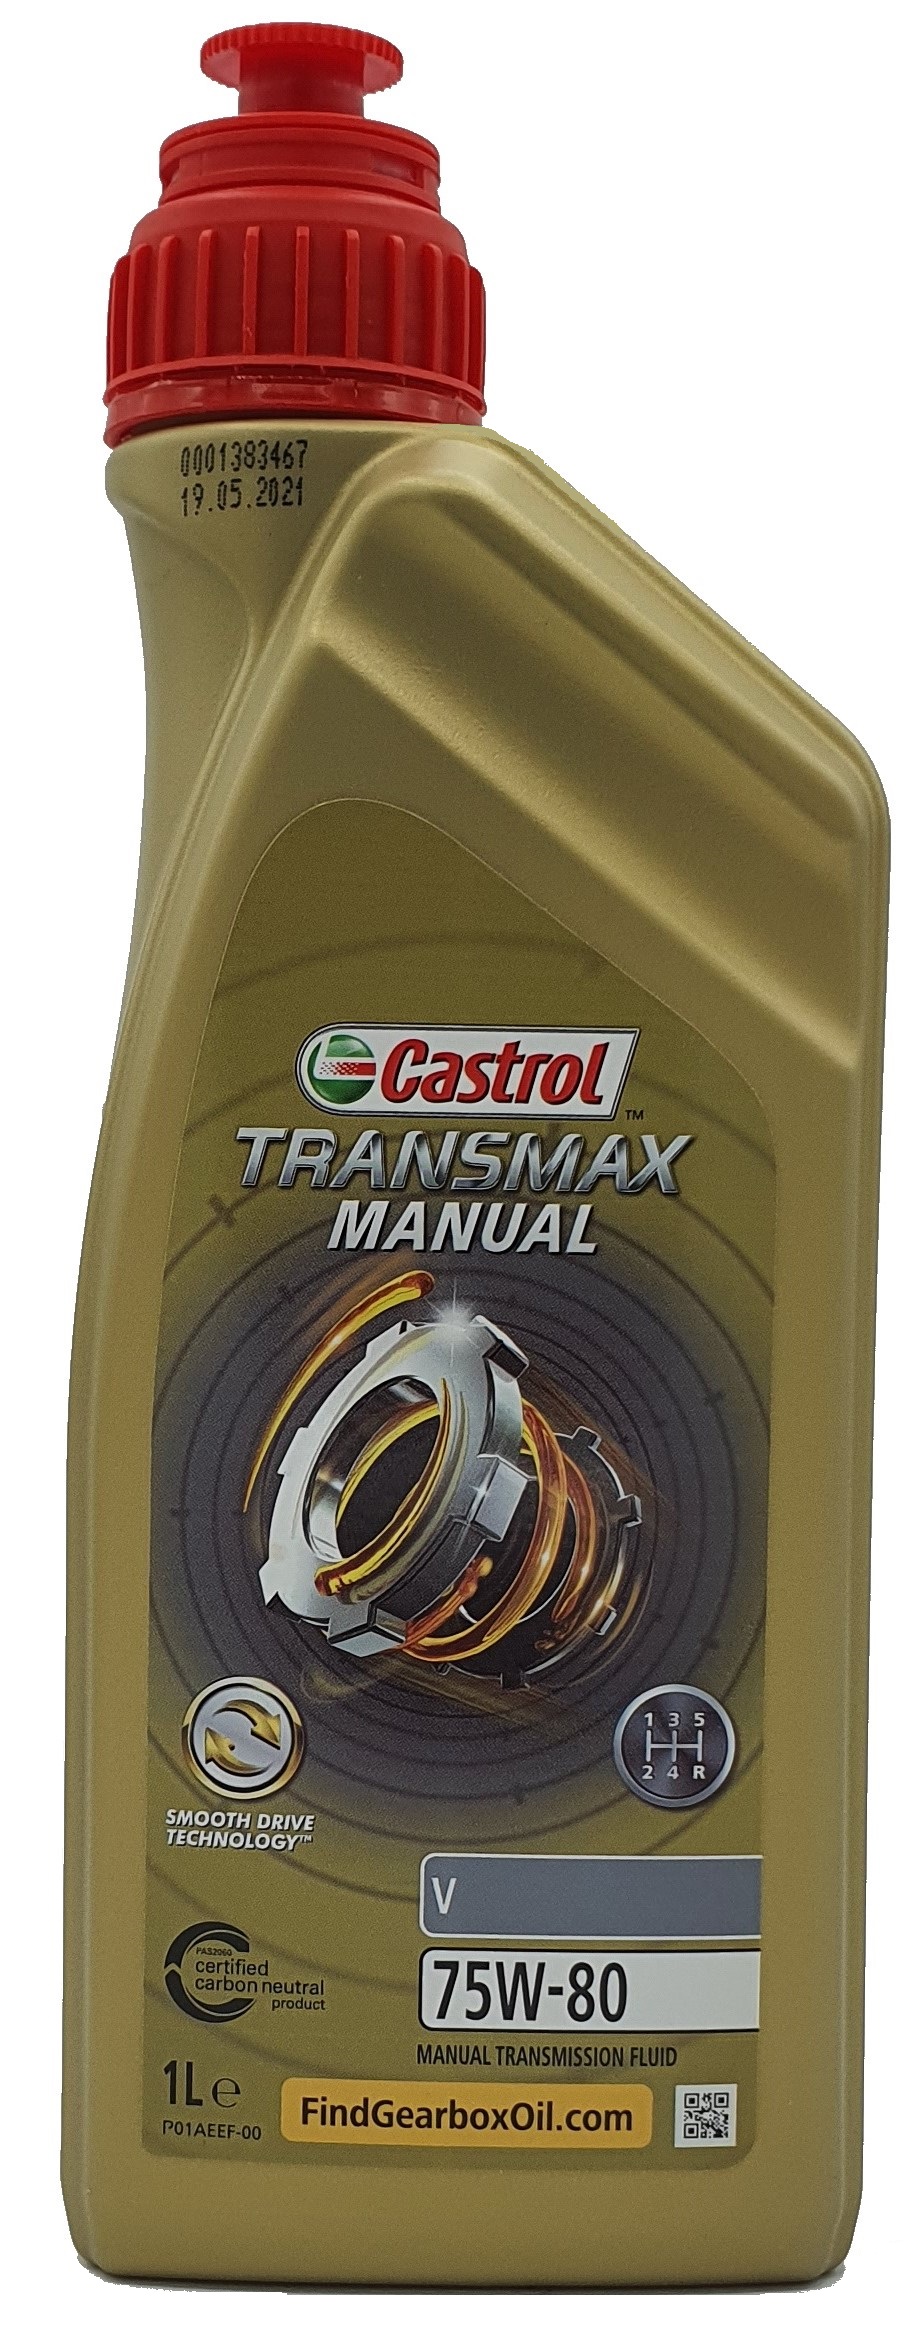 Castrol Transmax Manual V 75W-80 1 Liter